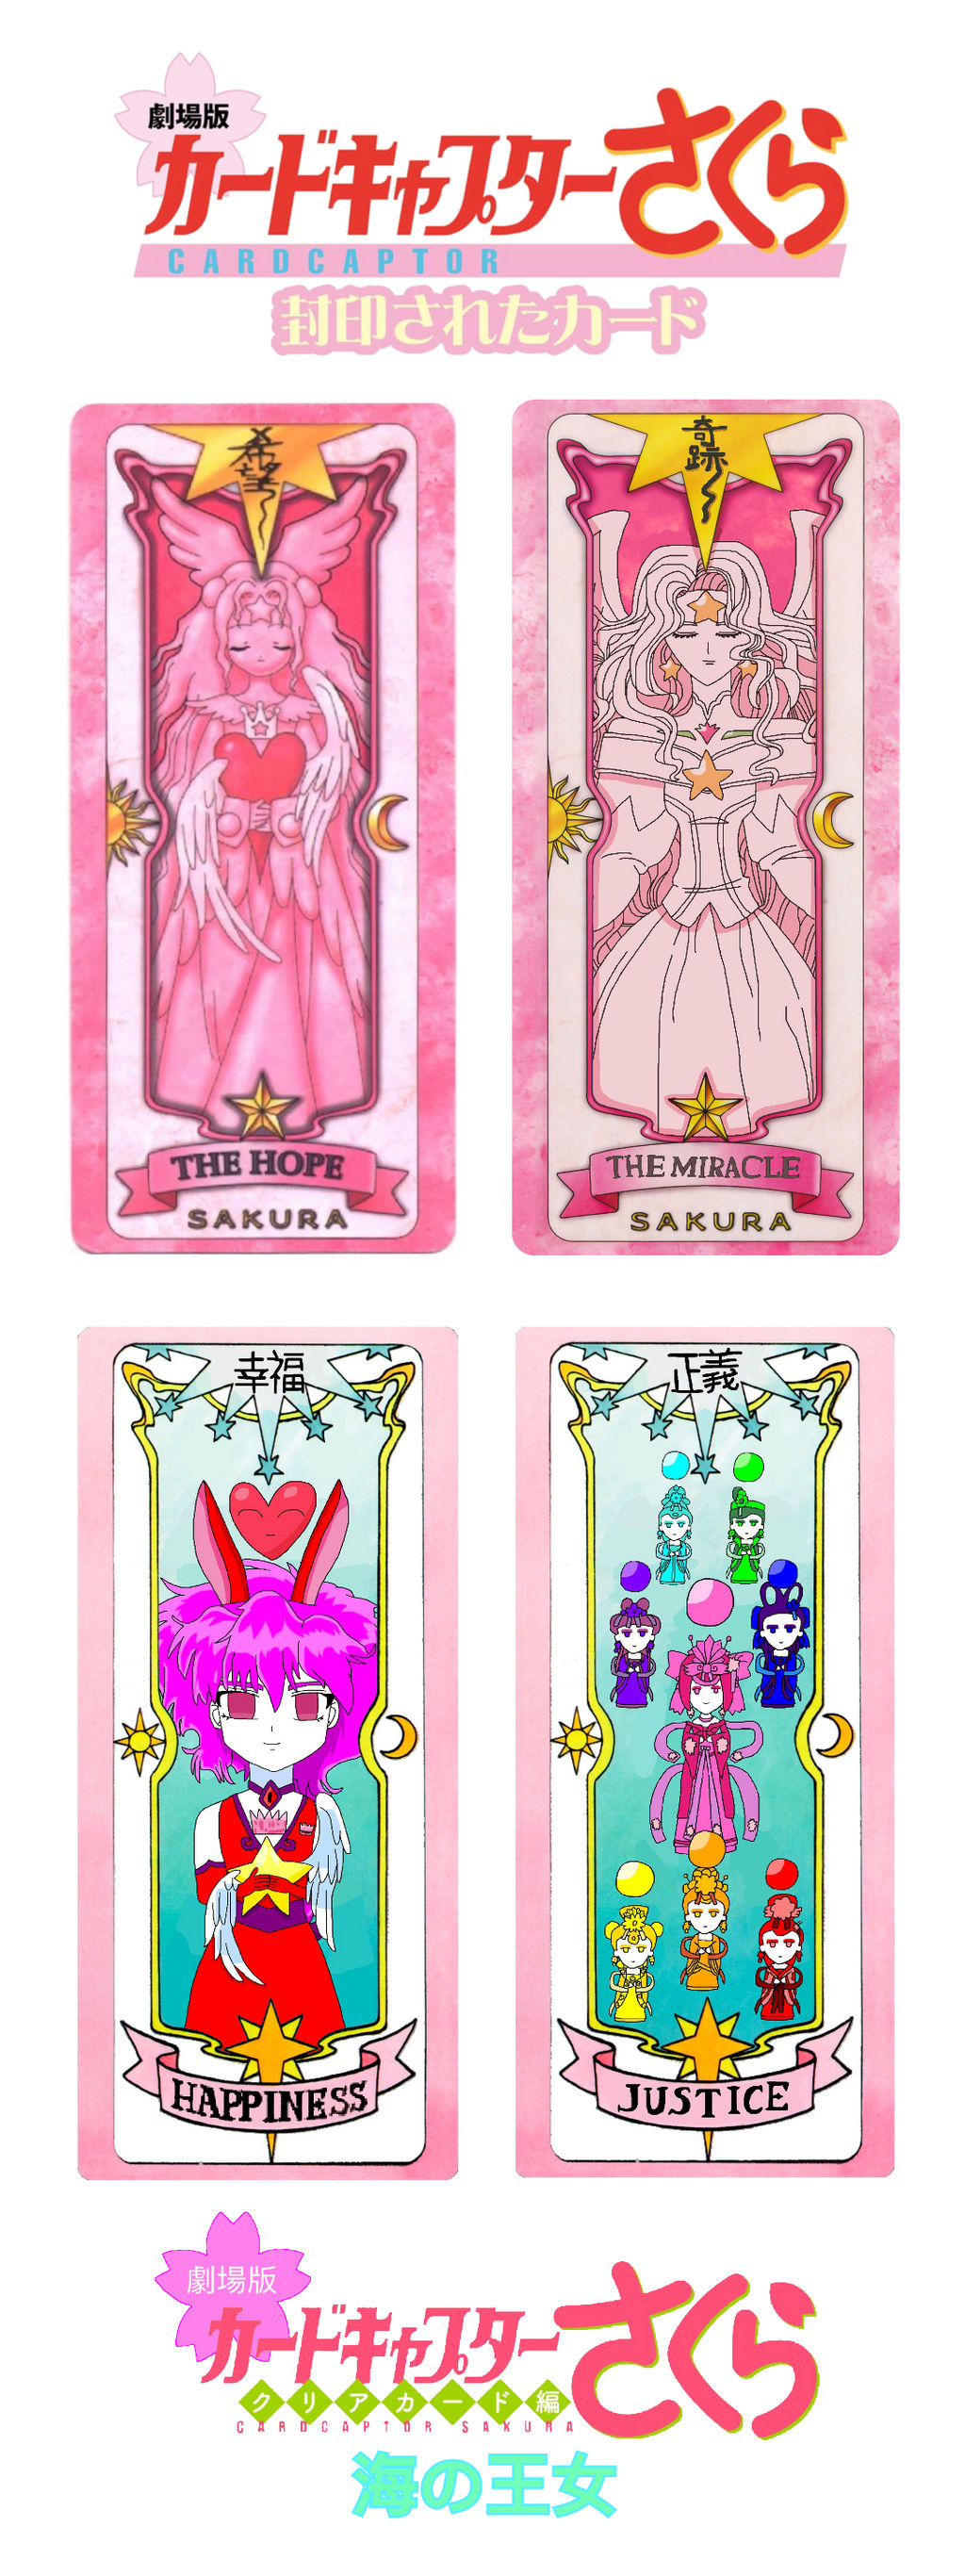 Cardcaptor Sakura the Movie 2: The Sealed Card - Assista na Crunchyroll